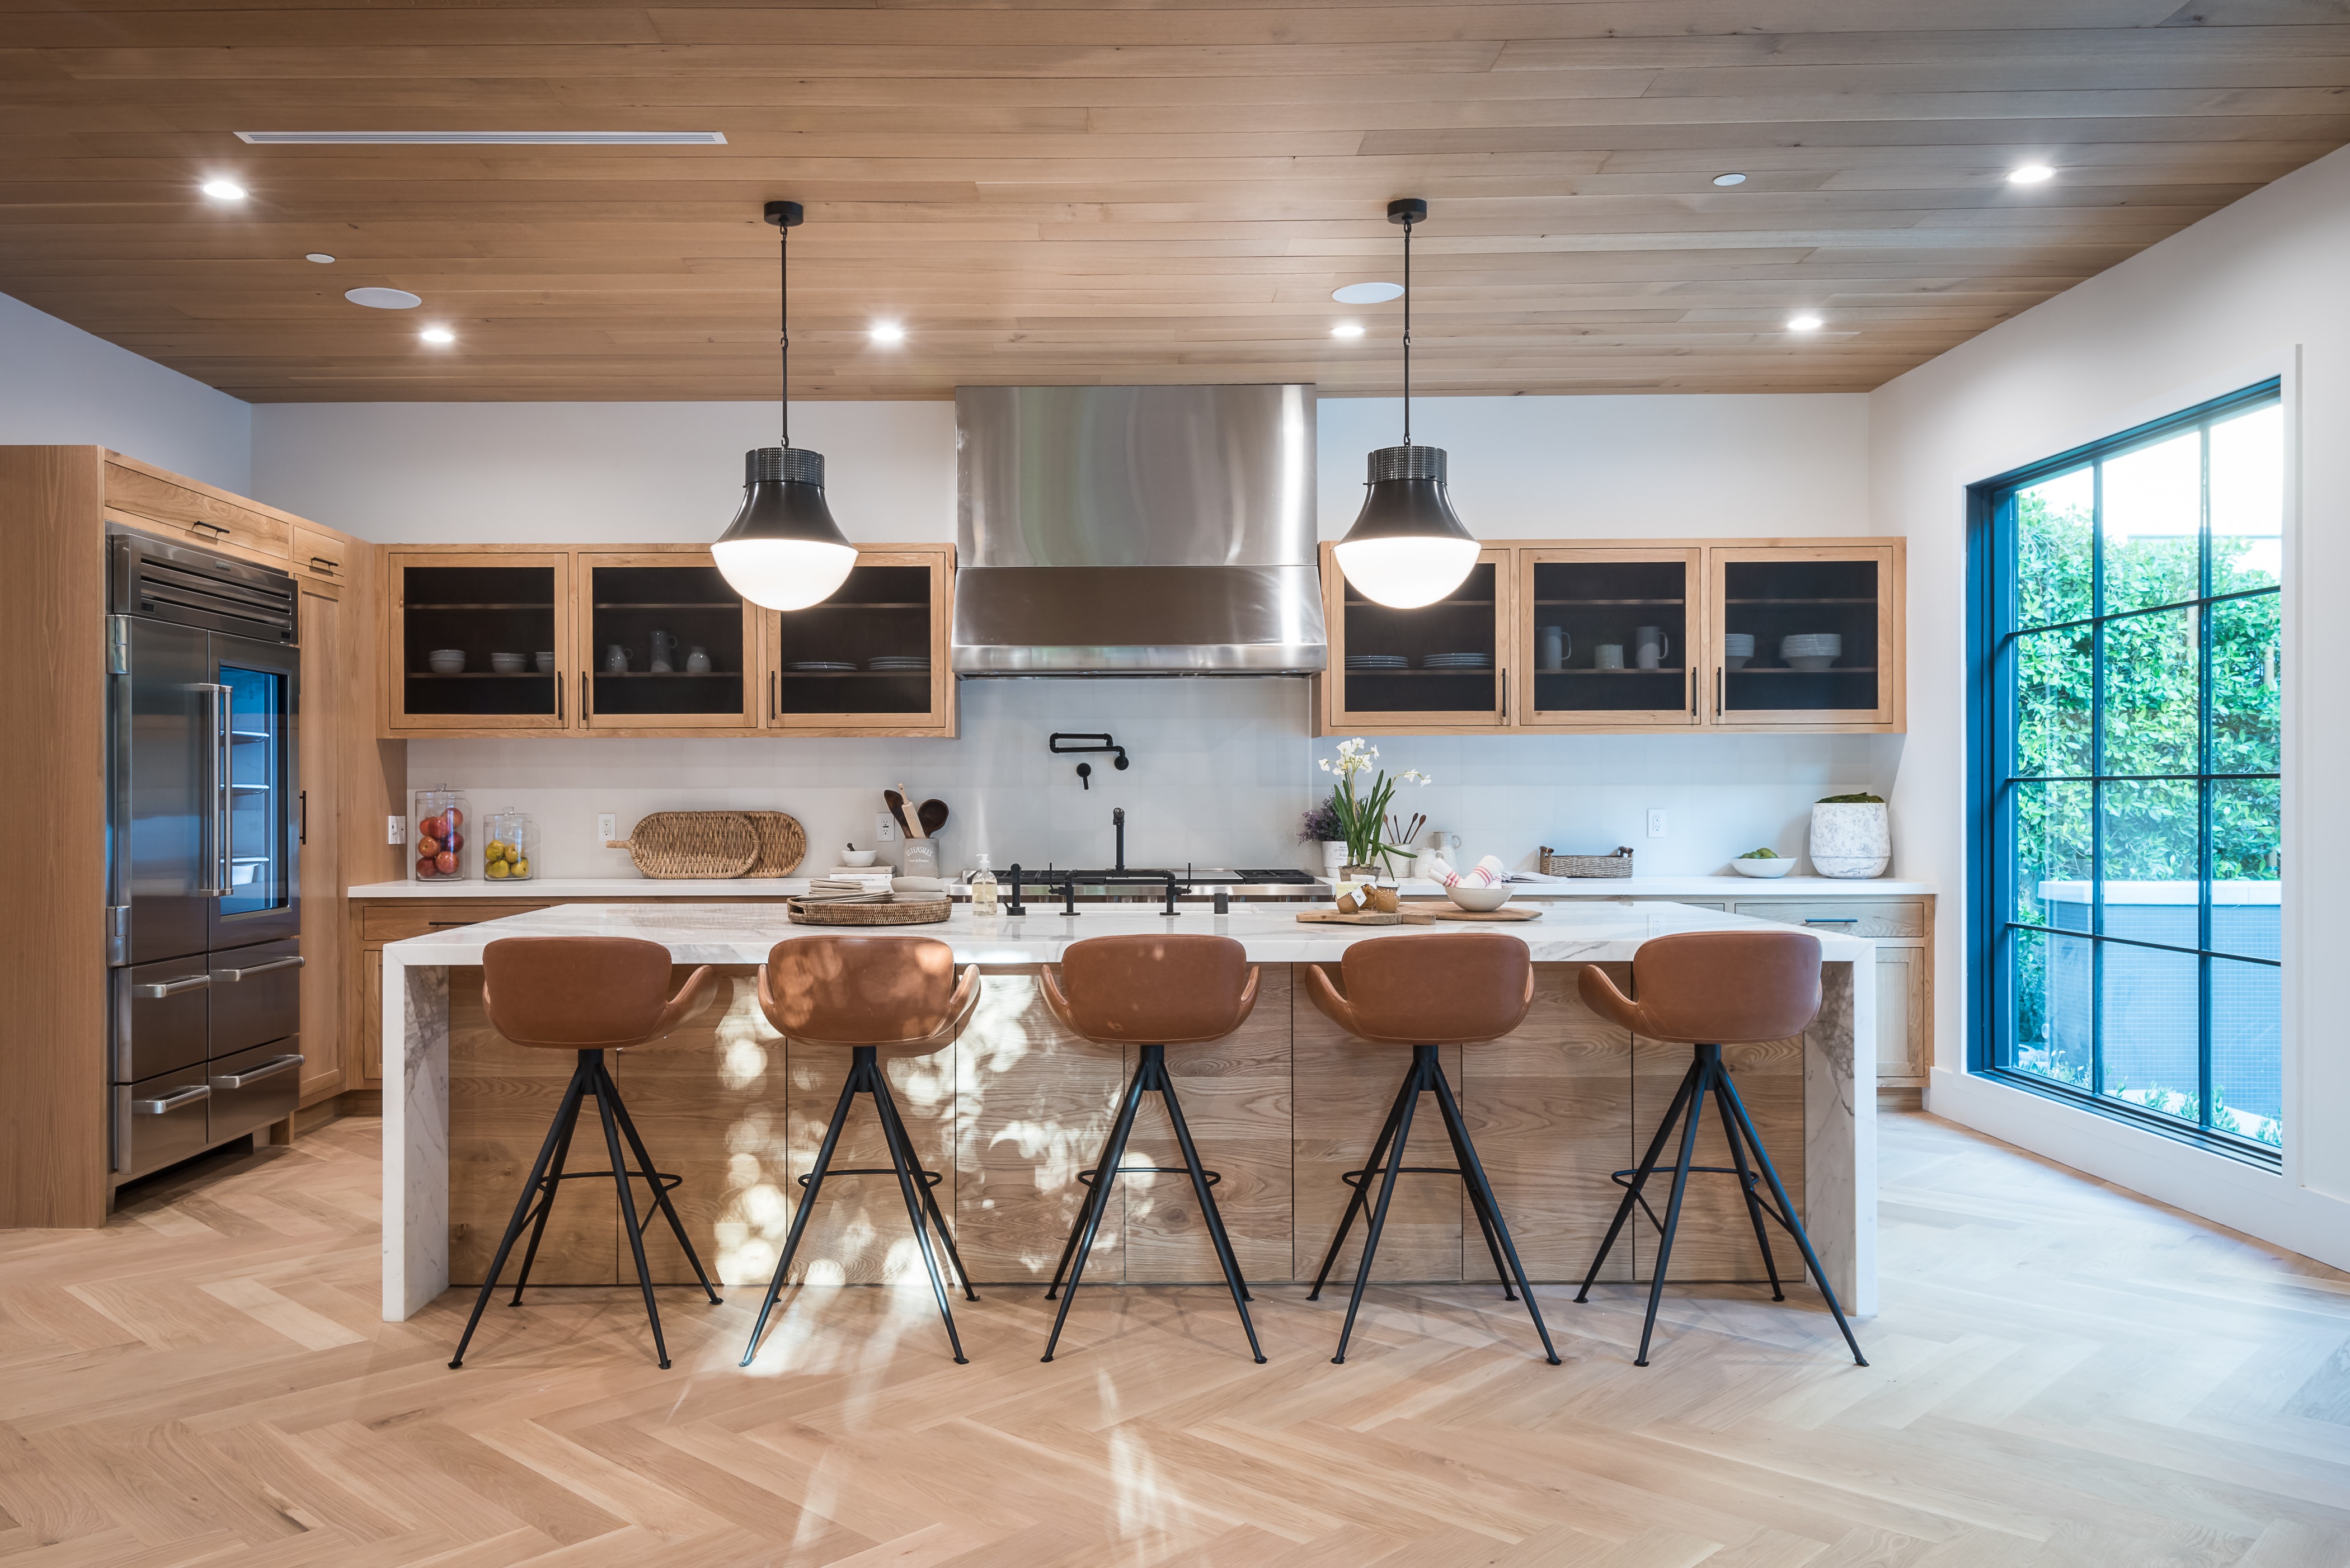 A cool kitchen setting idea